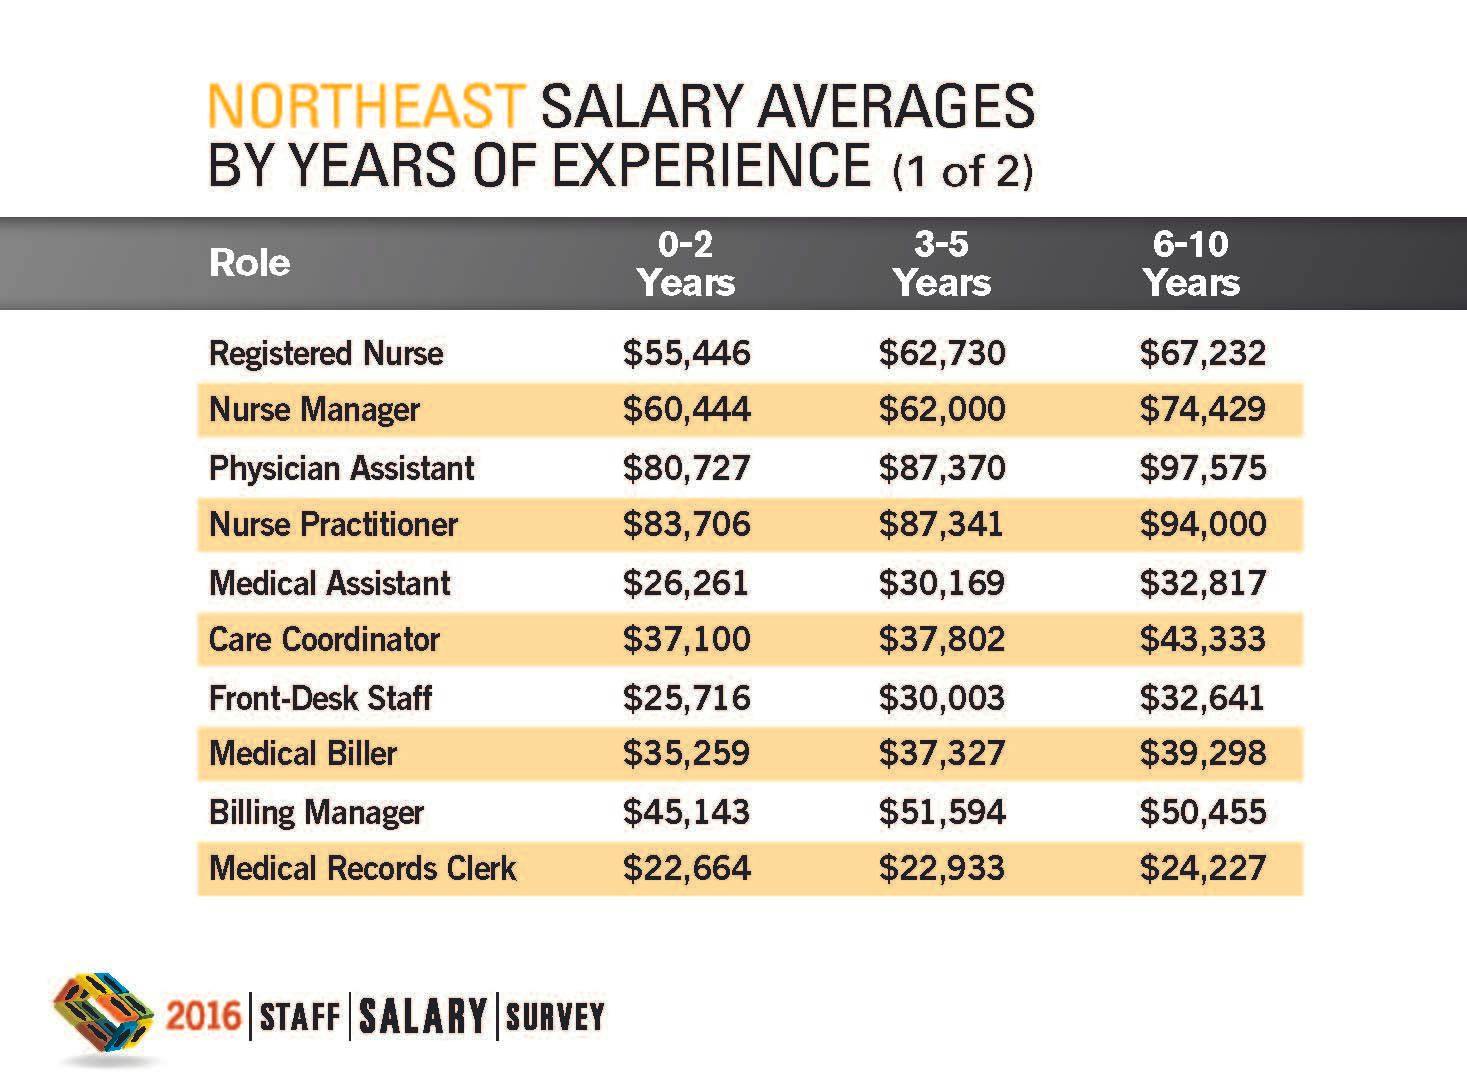 2016 Staff Salary Survey Results: Regional